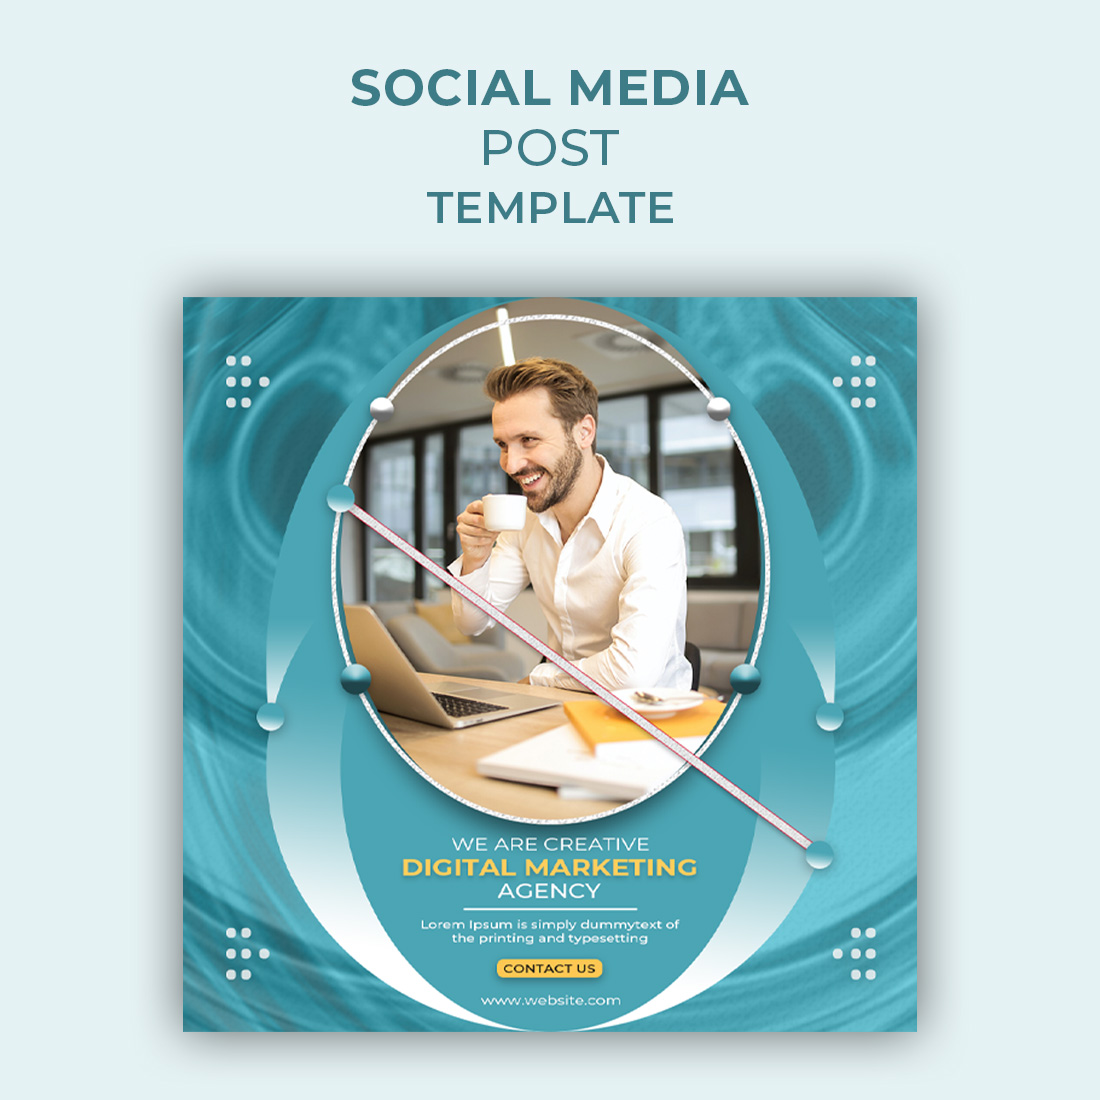 Digital marketing social media post template design preview image.